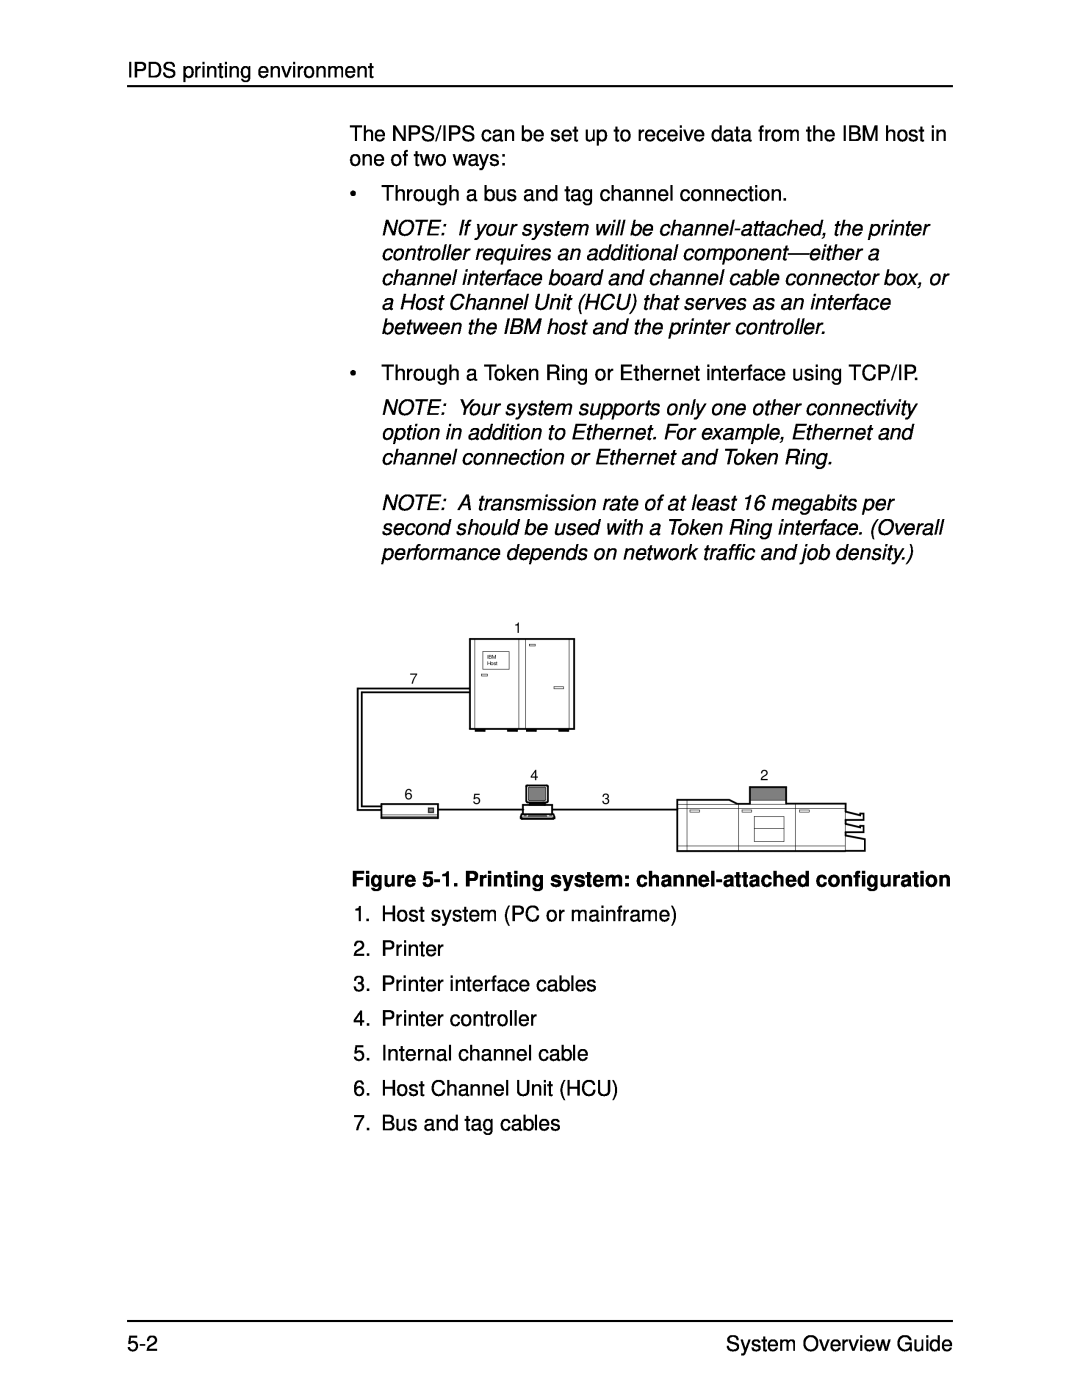 Xerox 92C, IPS, NPS, 4890, 4850 manual IPDS printing environment 